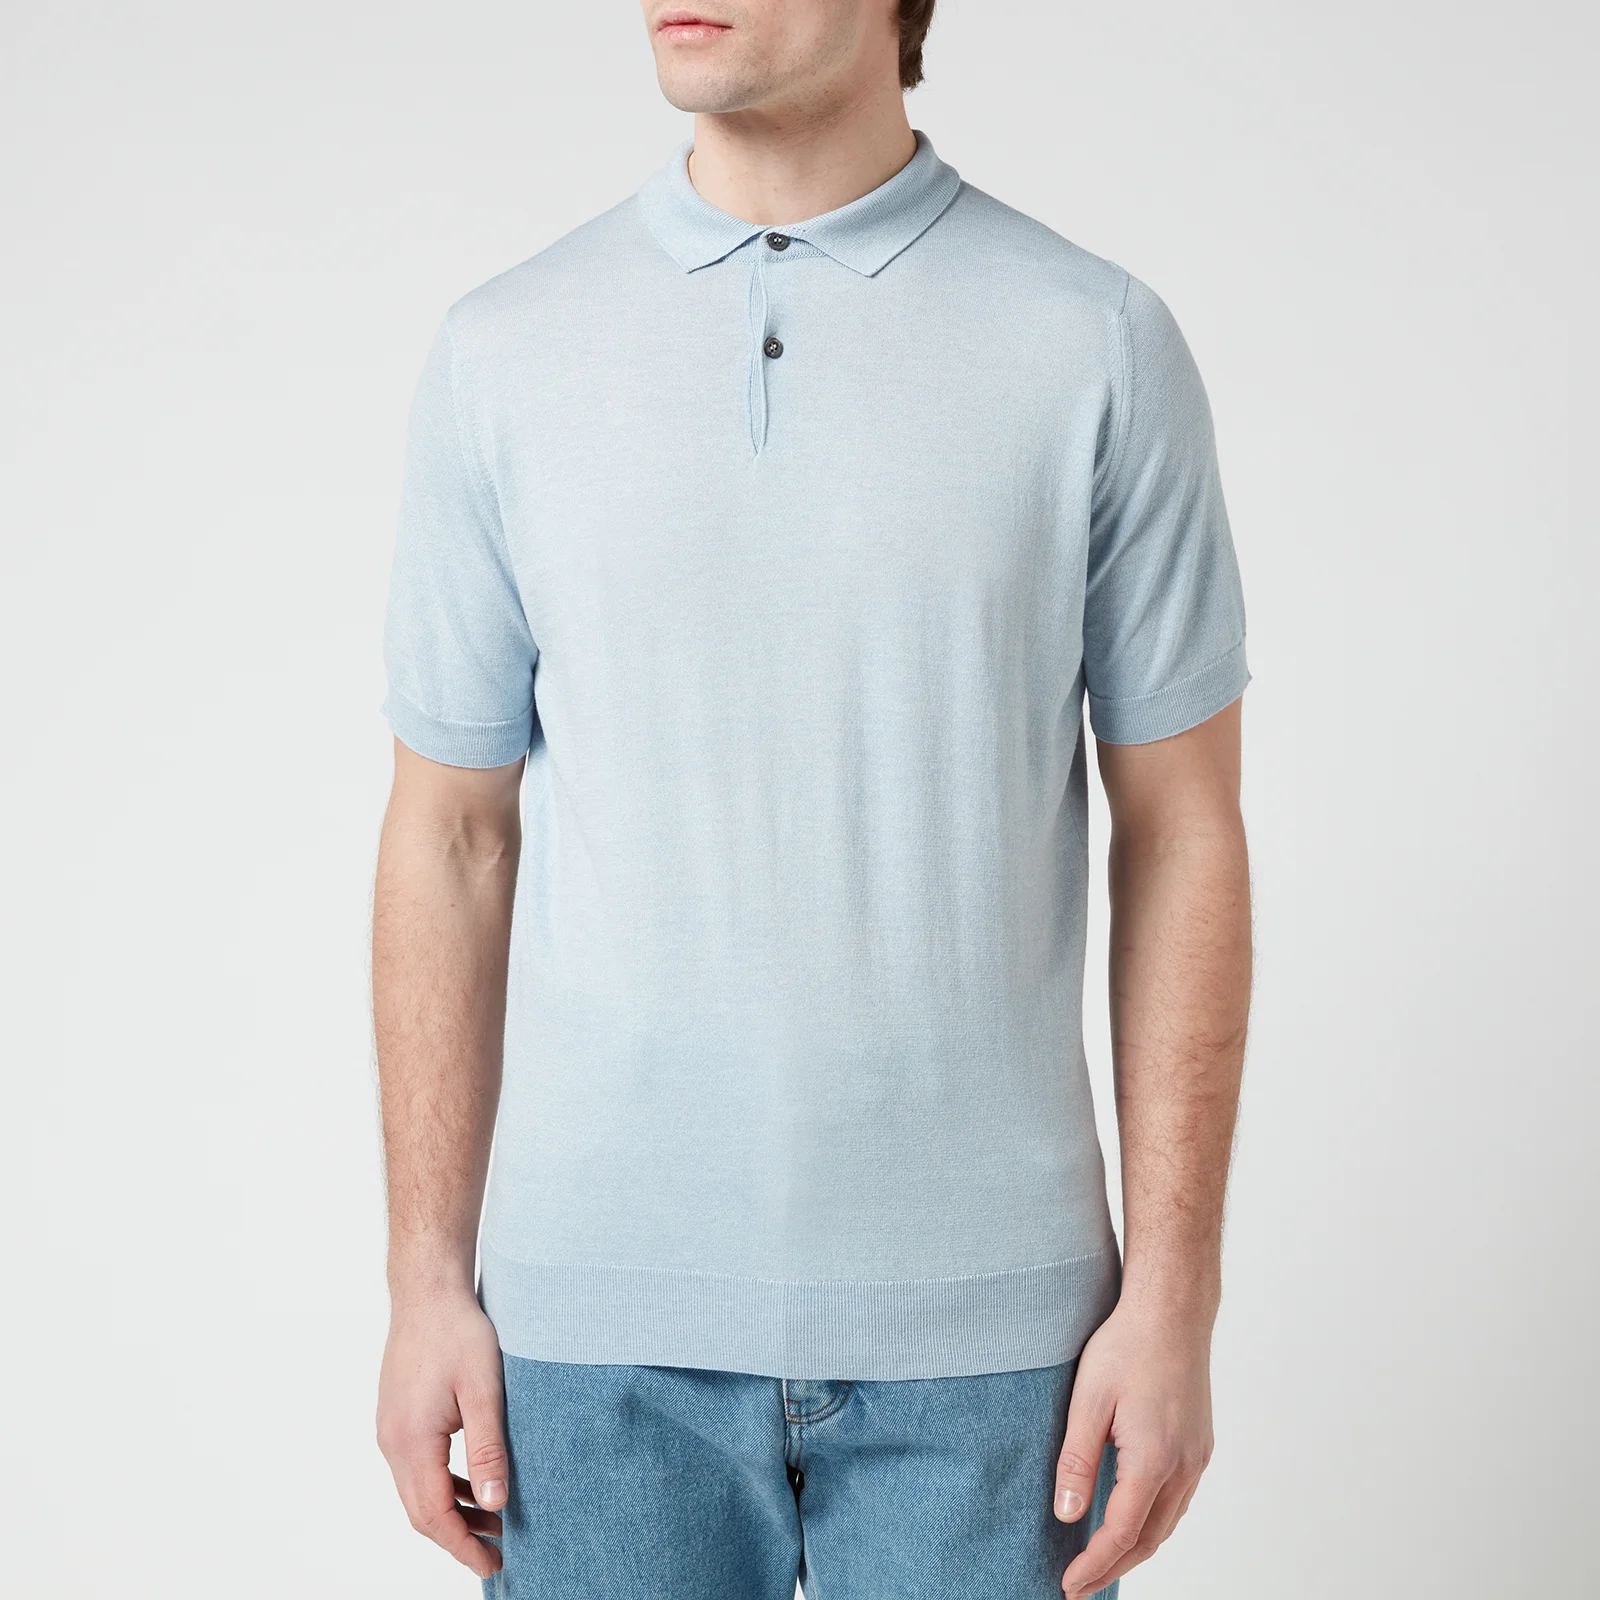 John Smedley Men's Cpayton Polo Shirt - Blue Sky Image 1